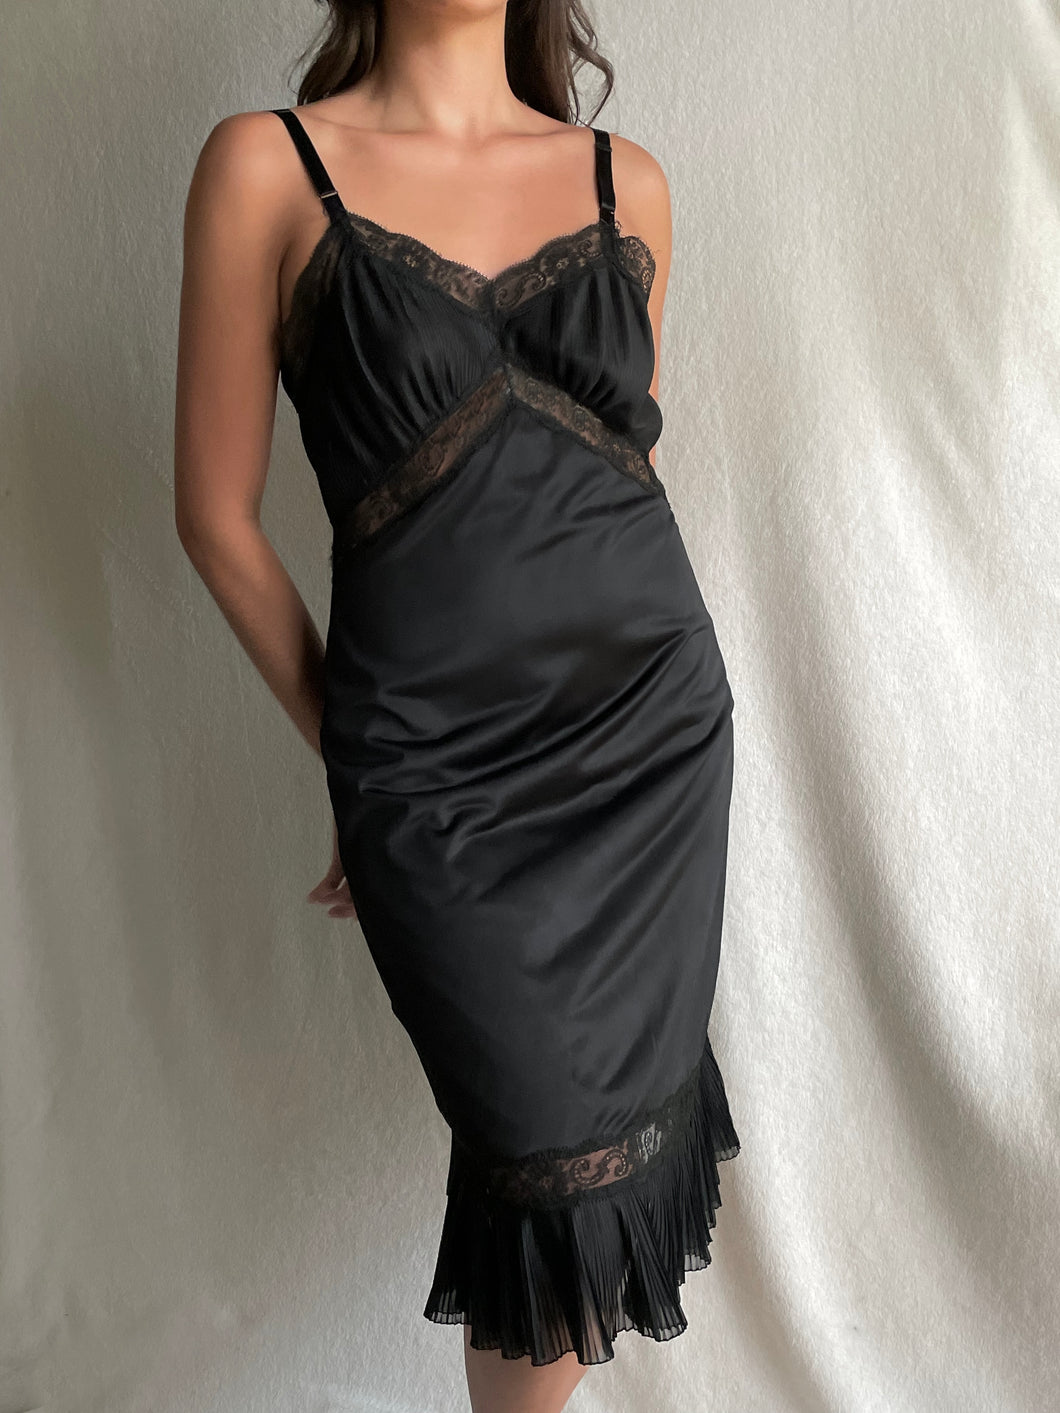 Vintage 80s Black Satin Nightgown